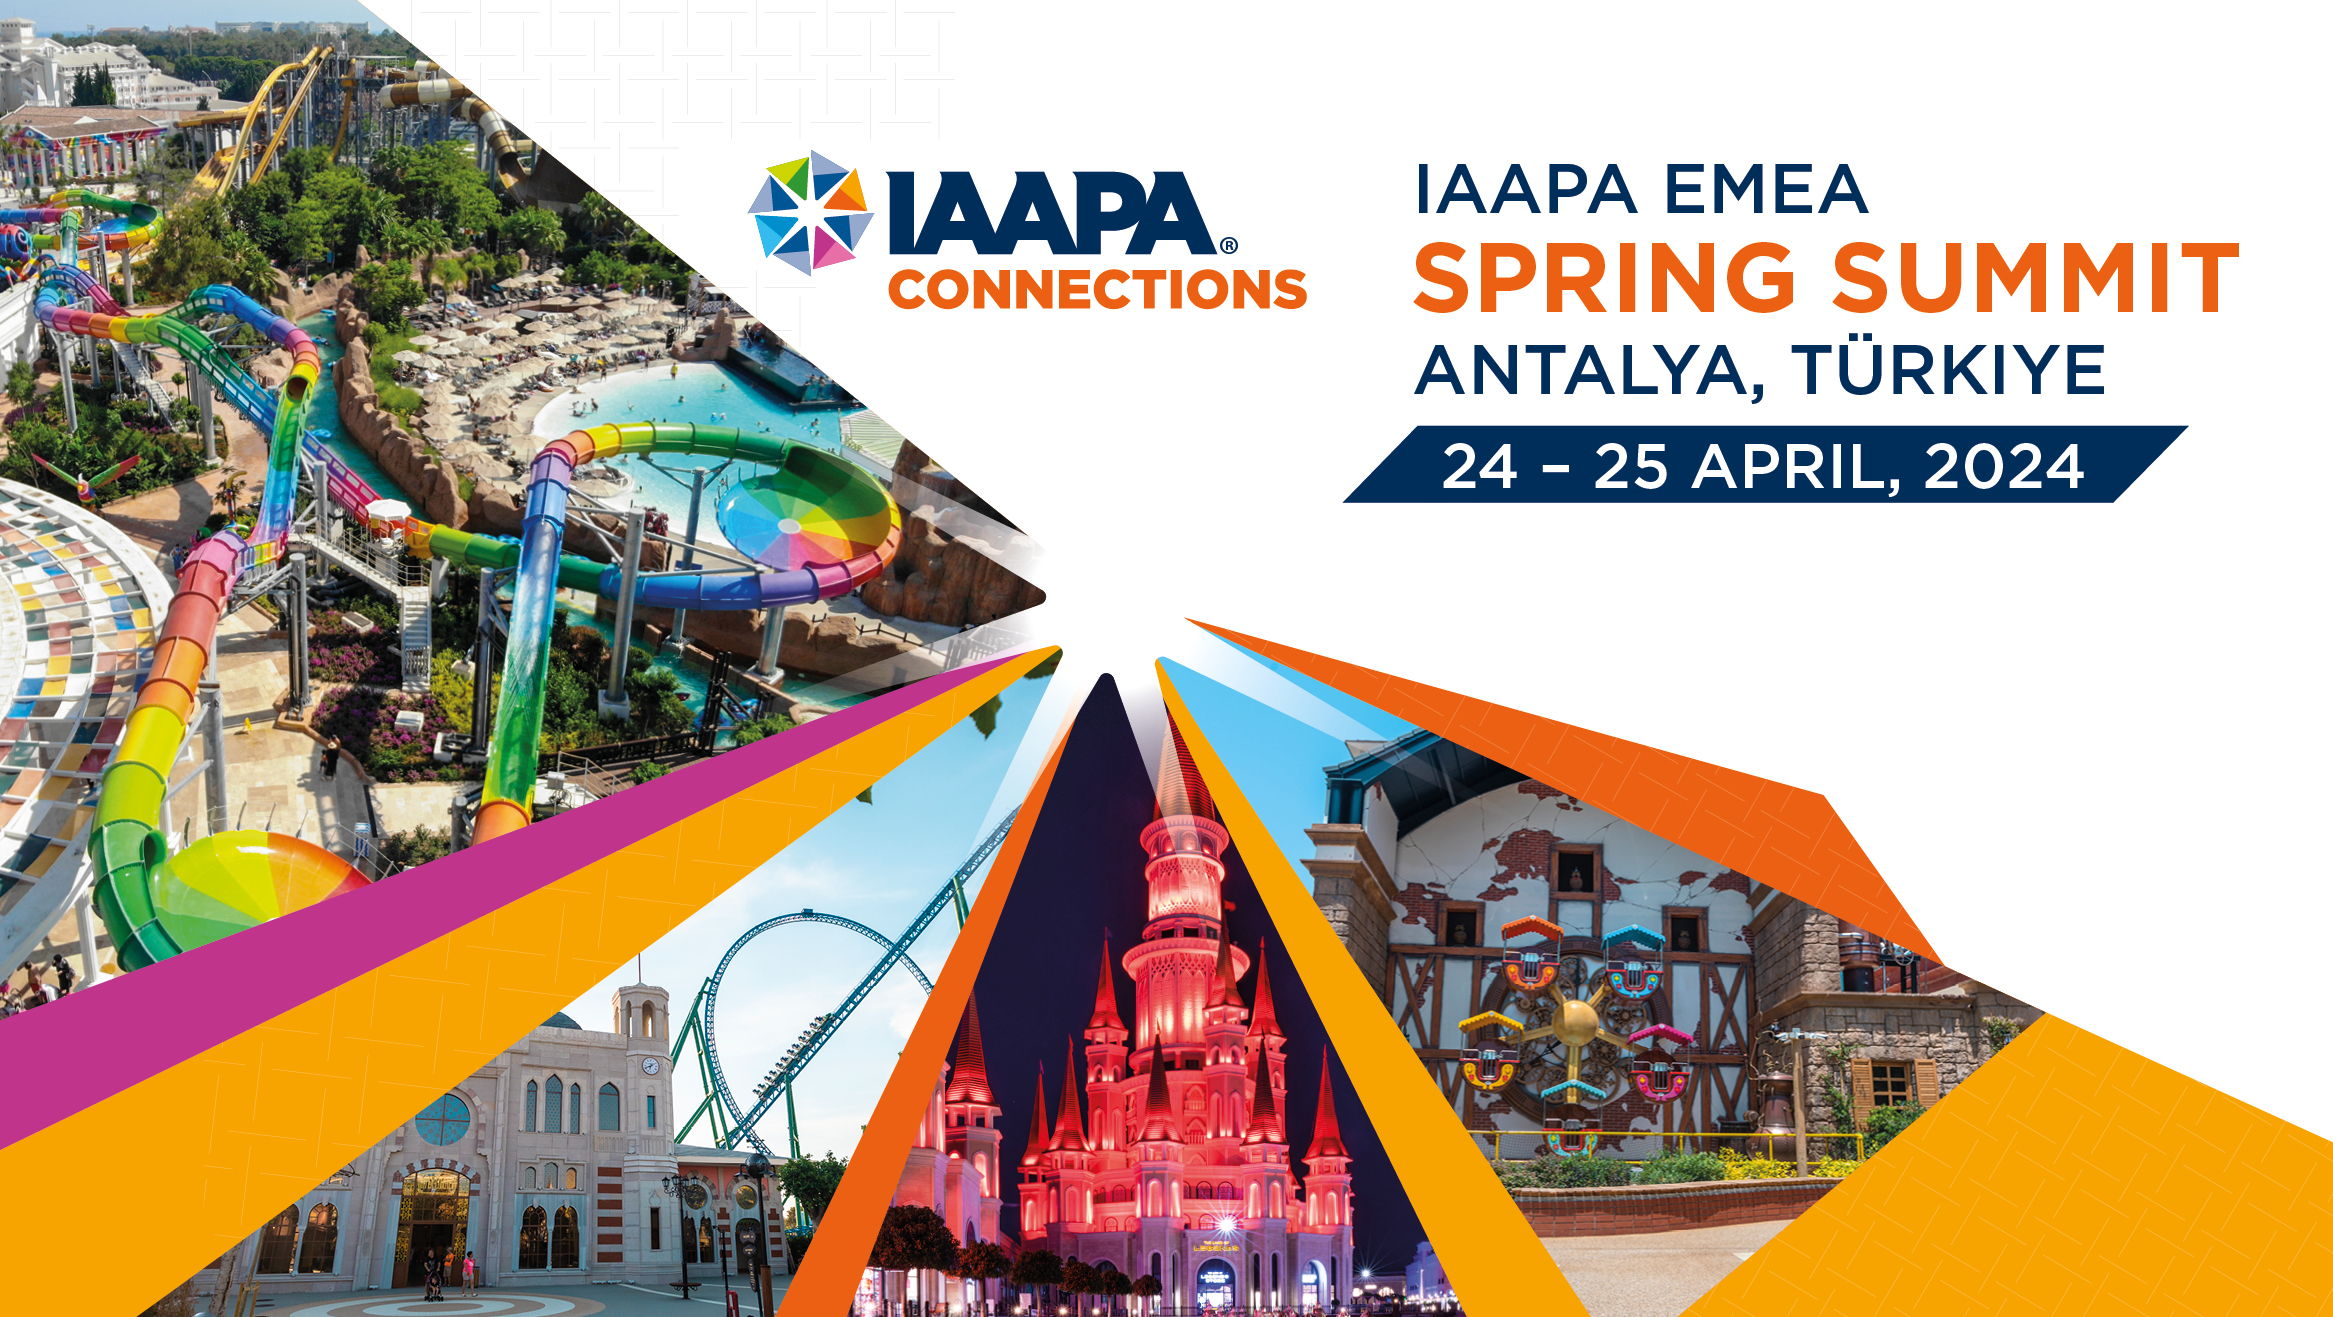 Cúpula da Primavera da IAAPA EMEA 2024